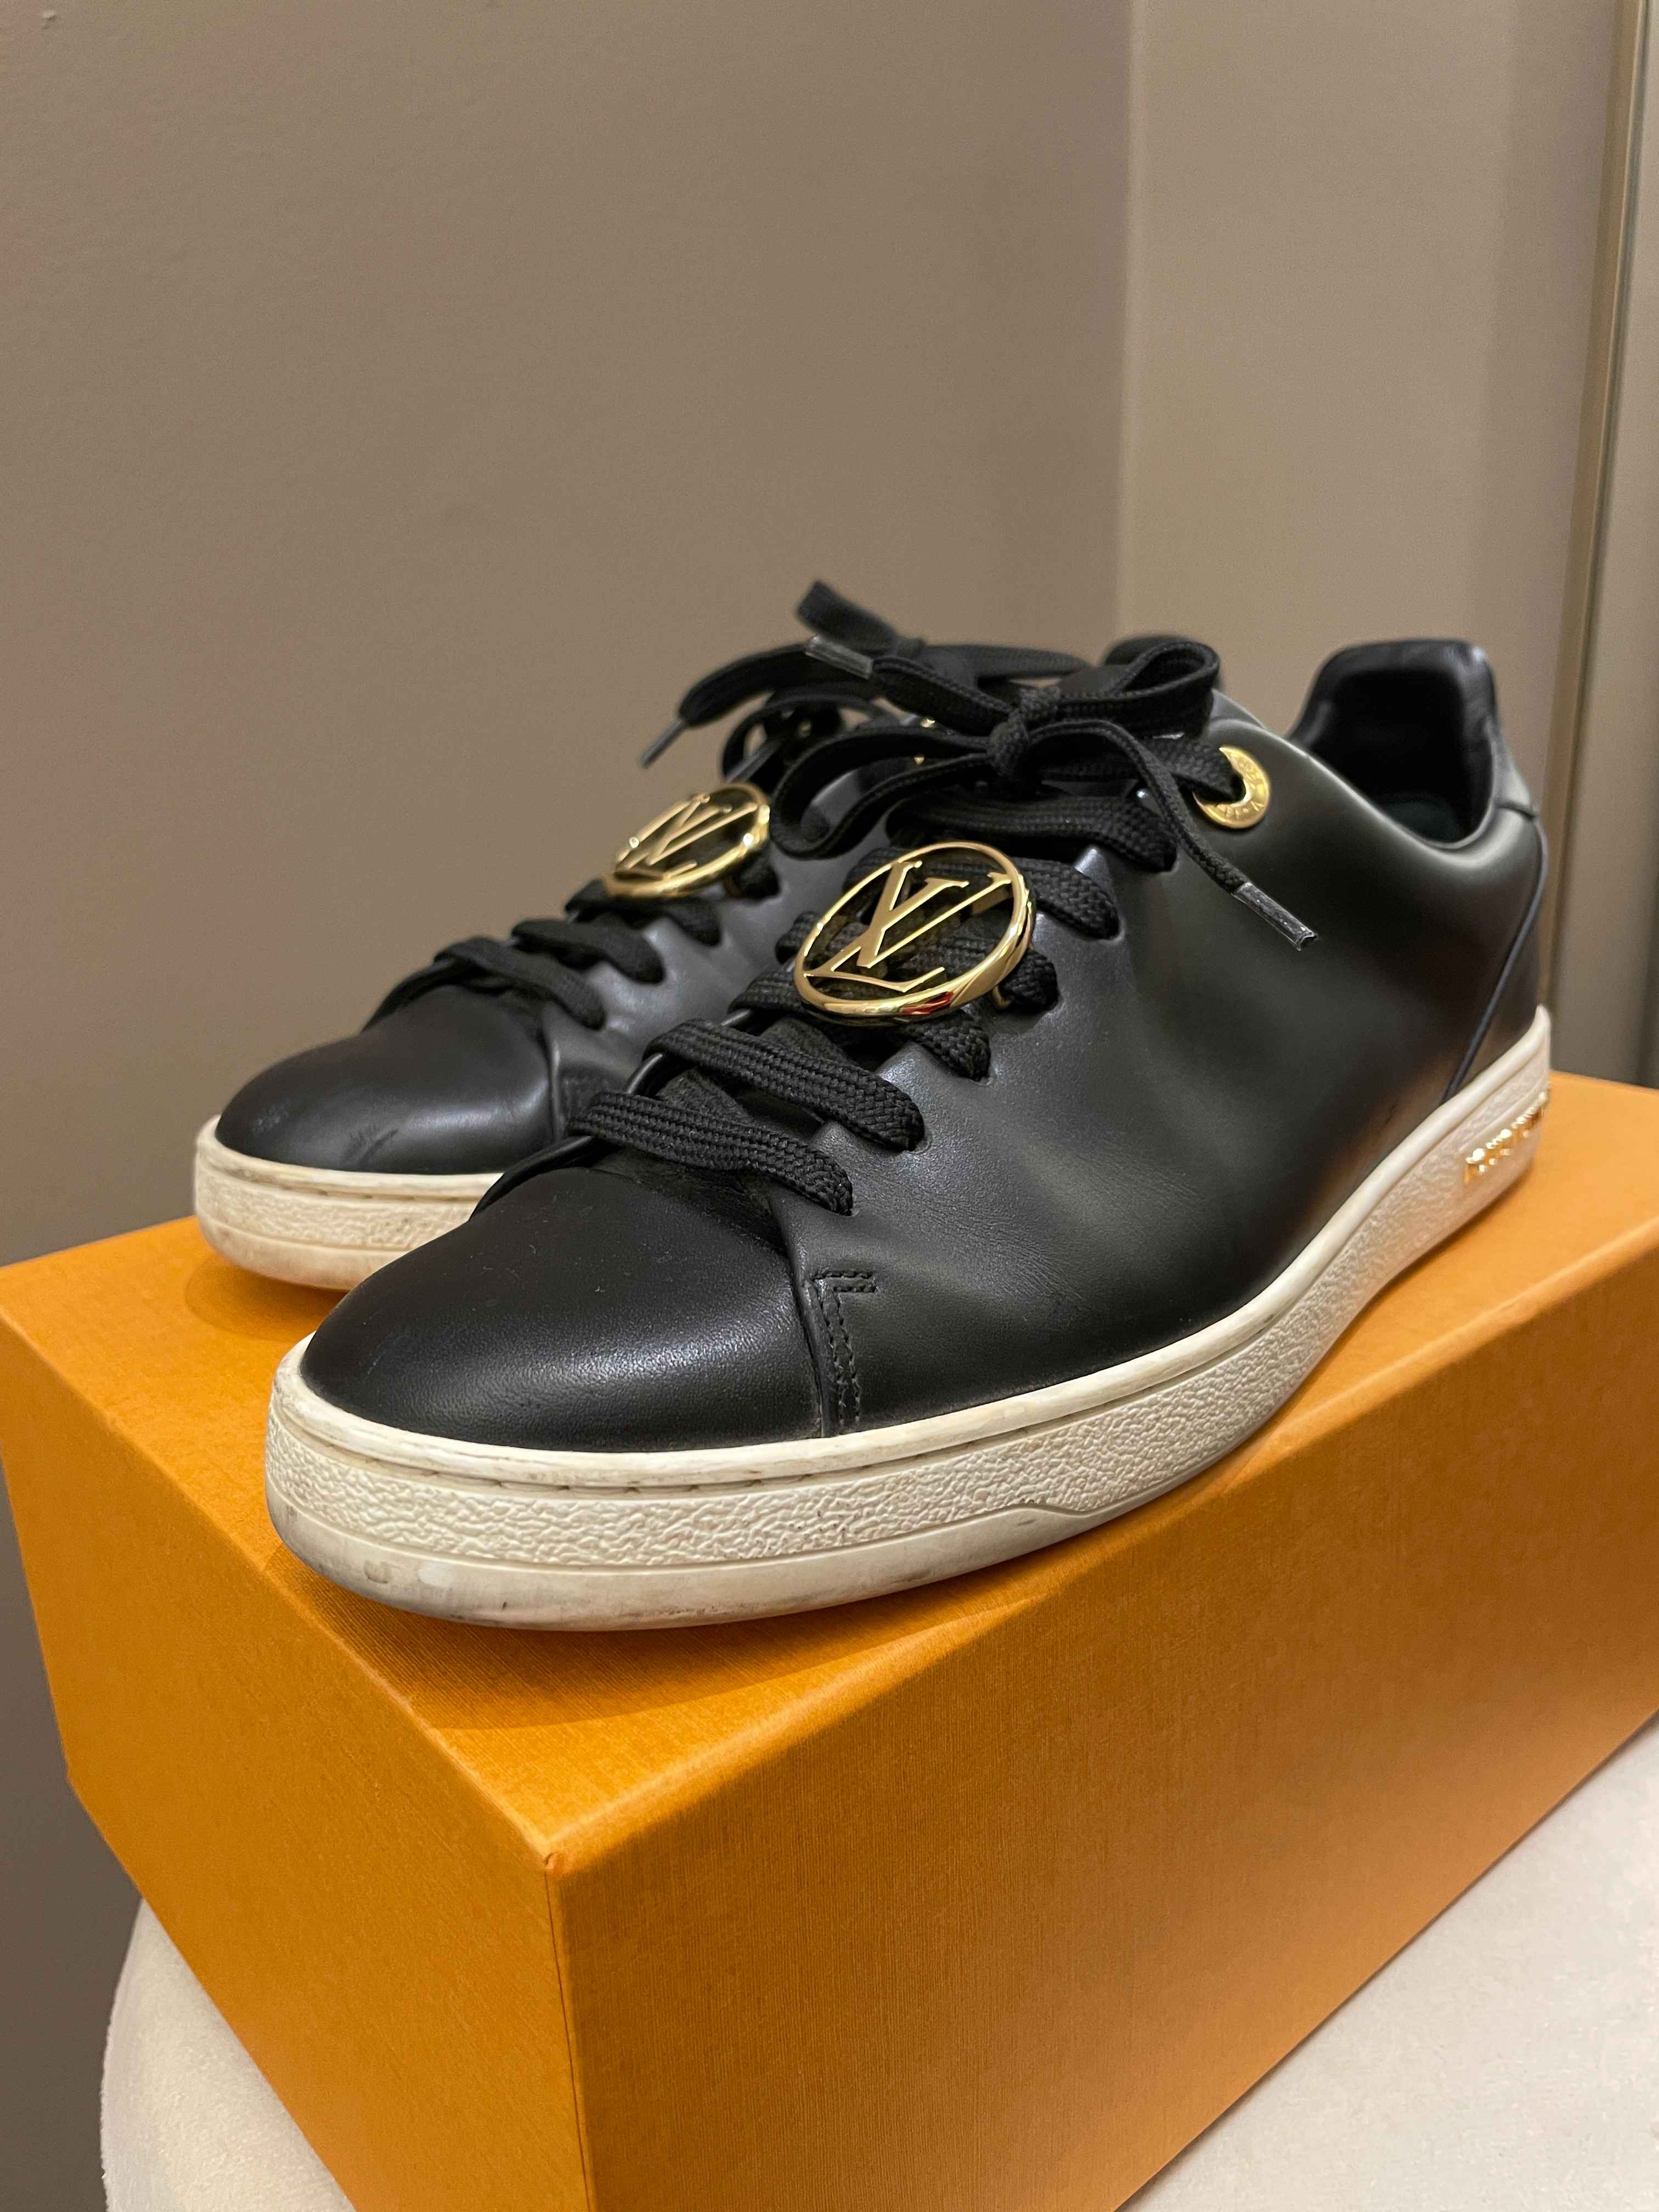 Louis Vuitton FRONTROW Sneaker BLACK. Size 34.0